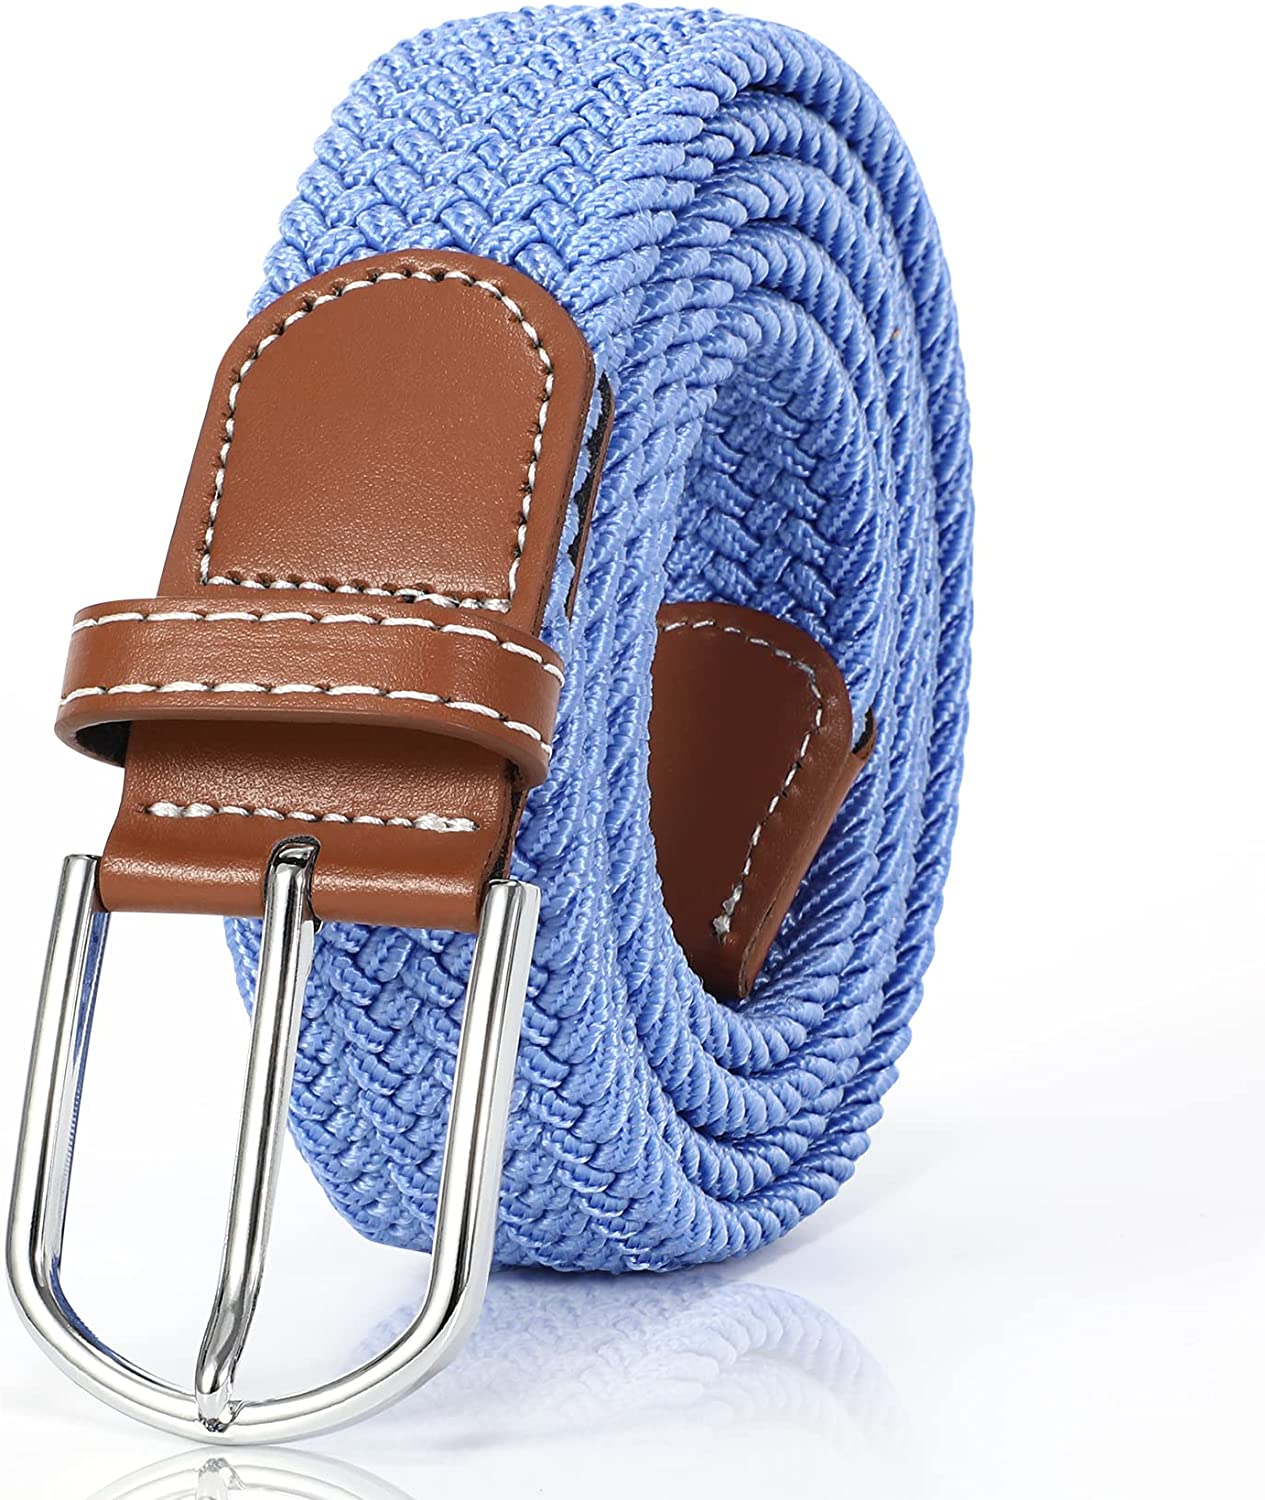 XZQTIVE Braided Belt Stretch Belt for Men and Women Multicolored